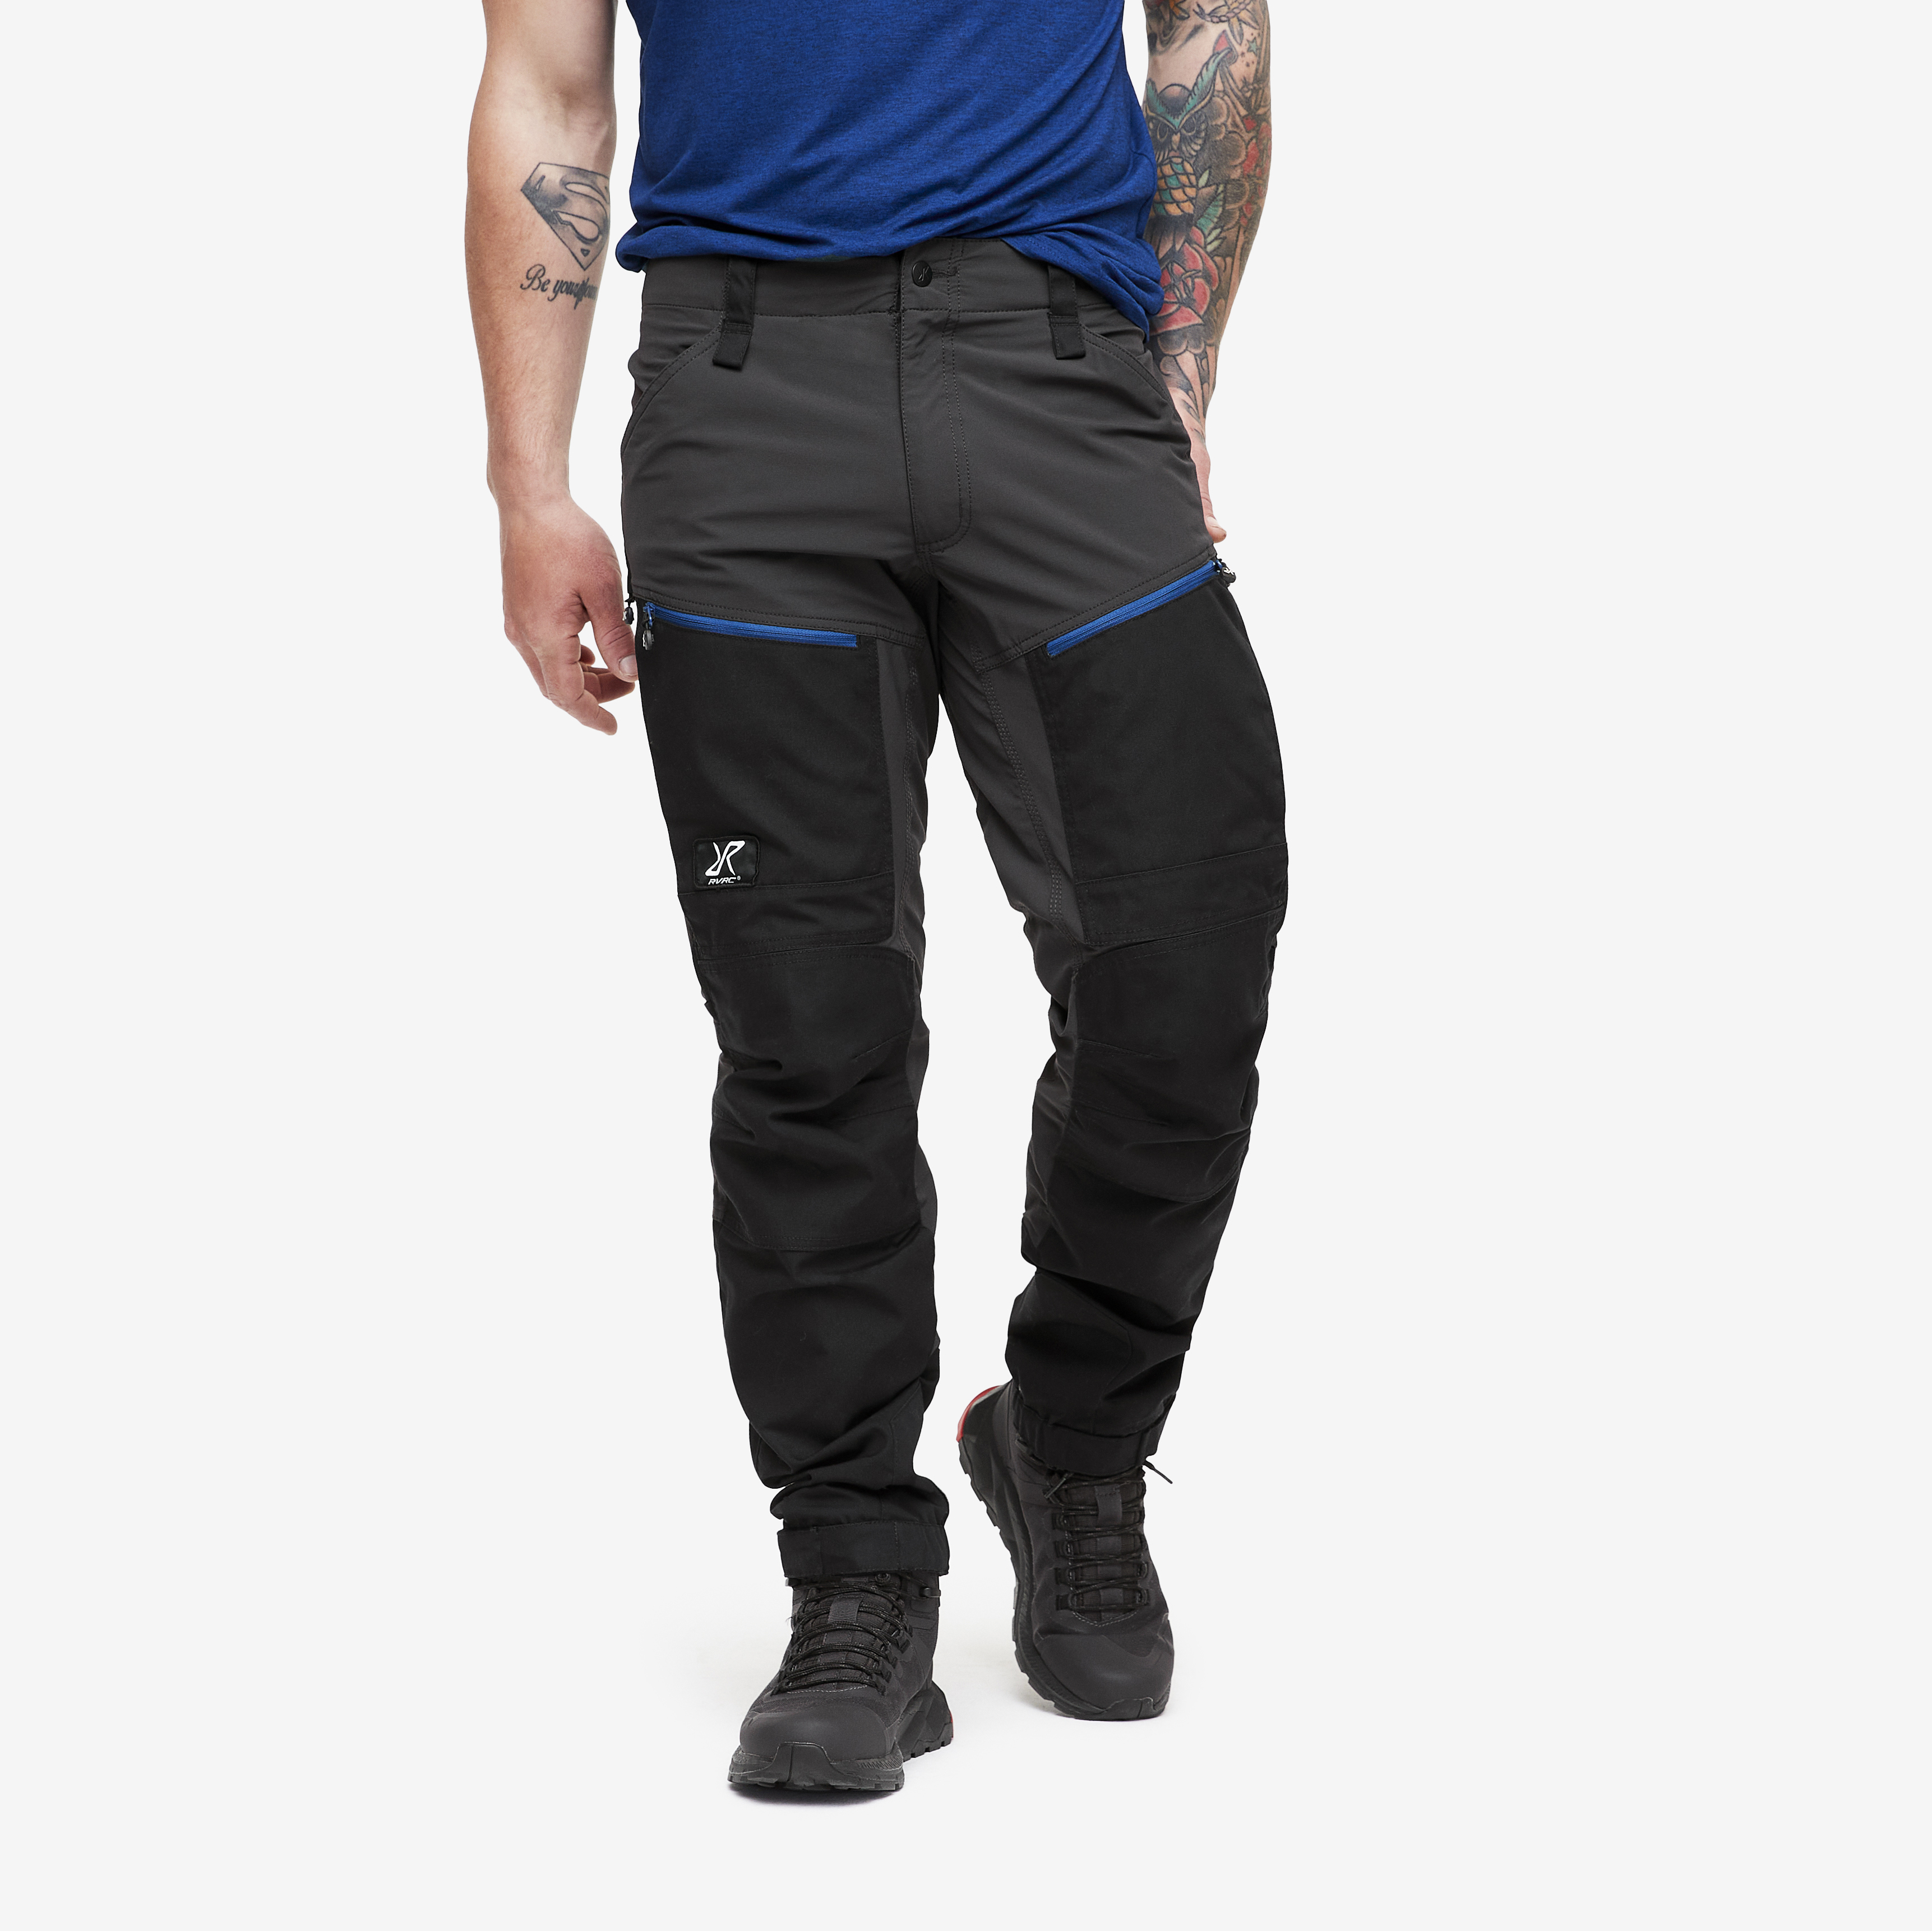 RVRC GP Pro Pants Anthracite/Dark Blue Miehet